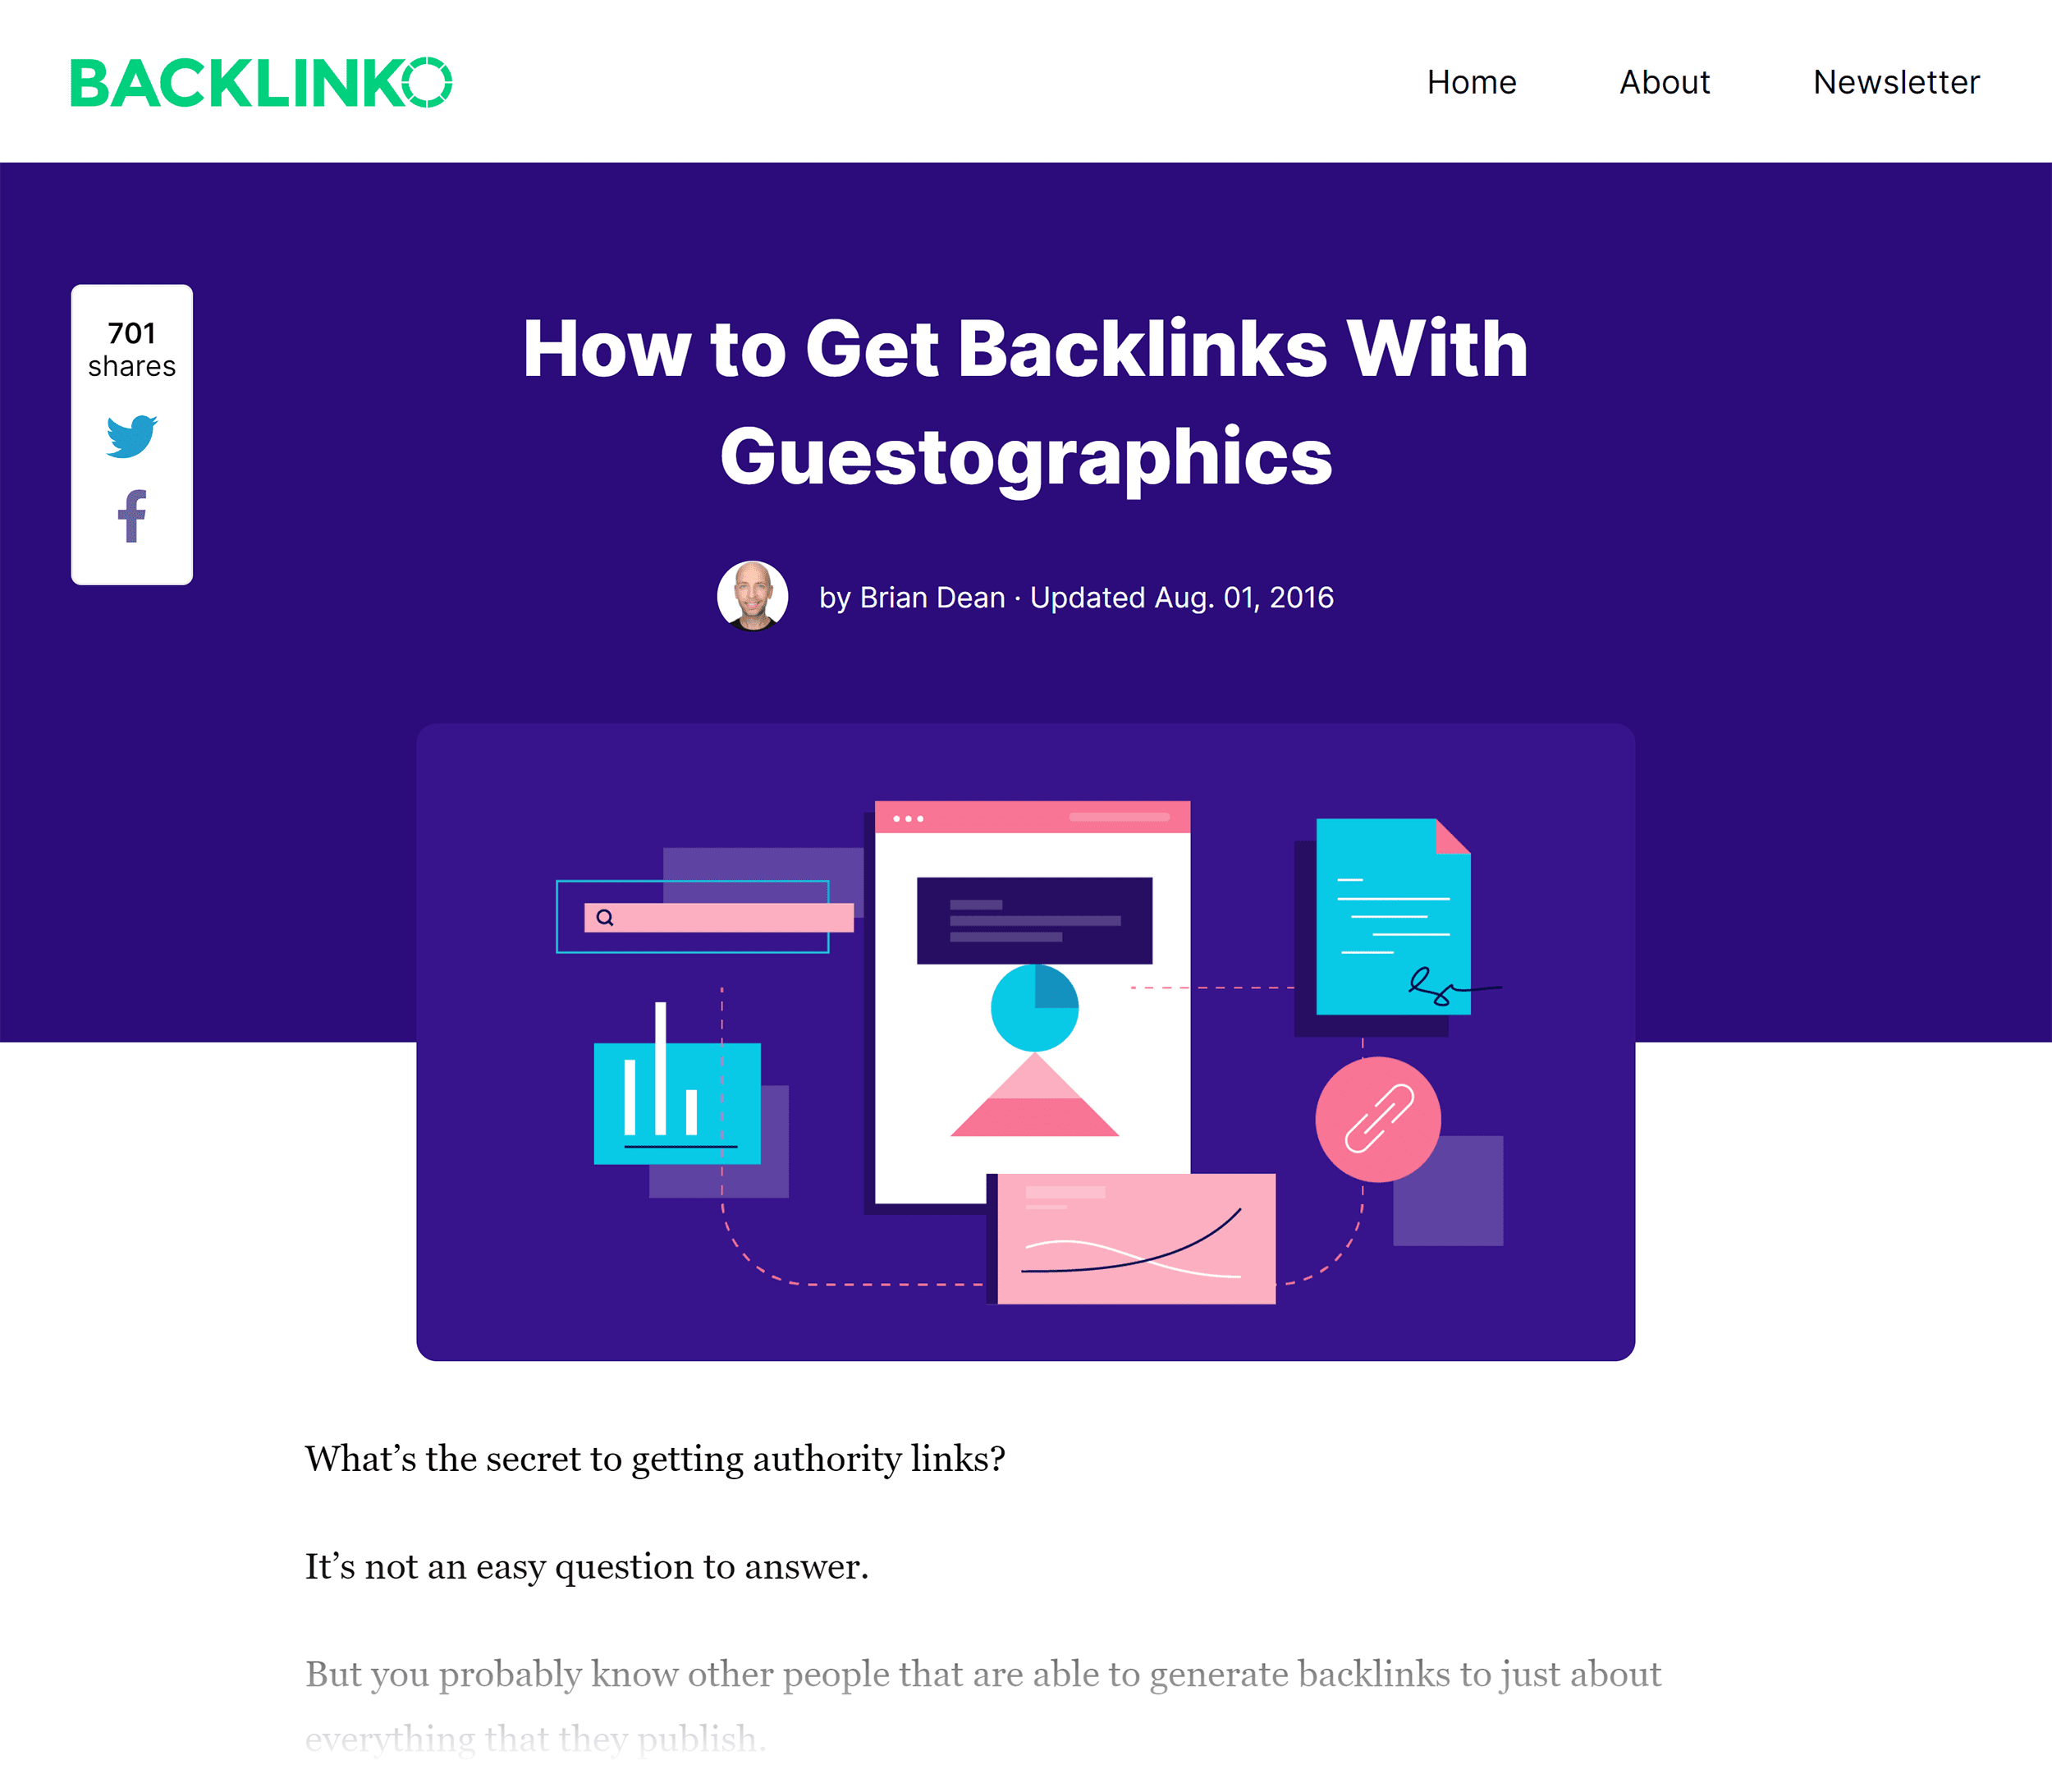 Backlinko – How to get backlinks